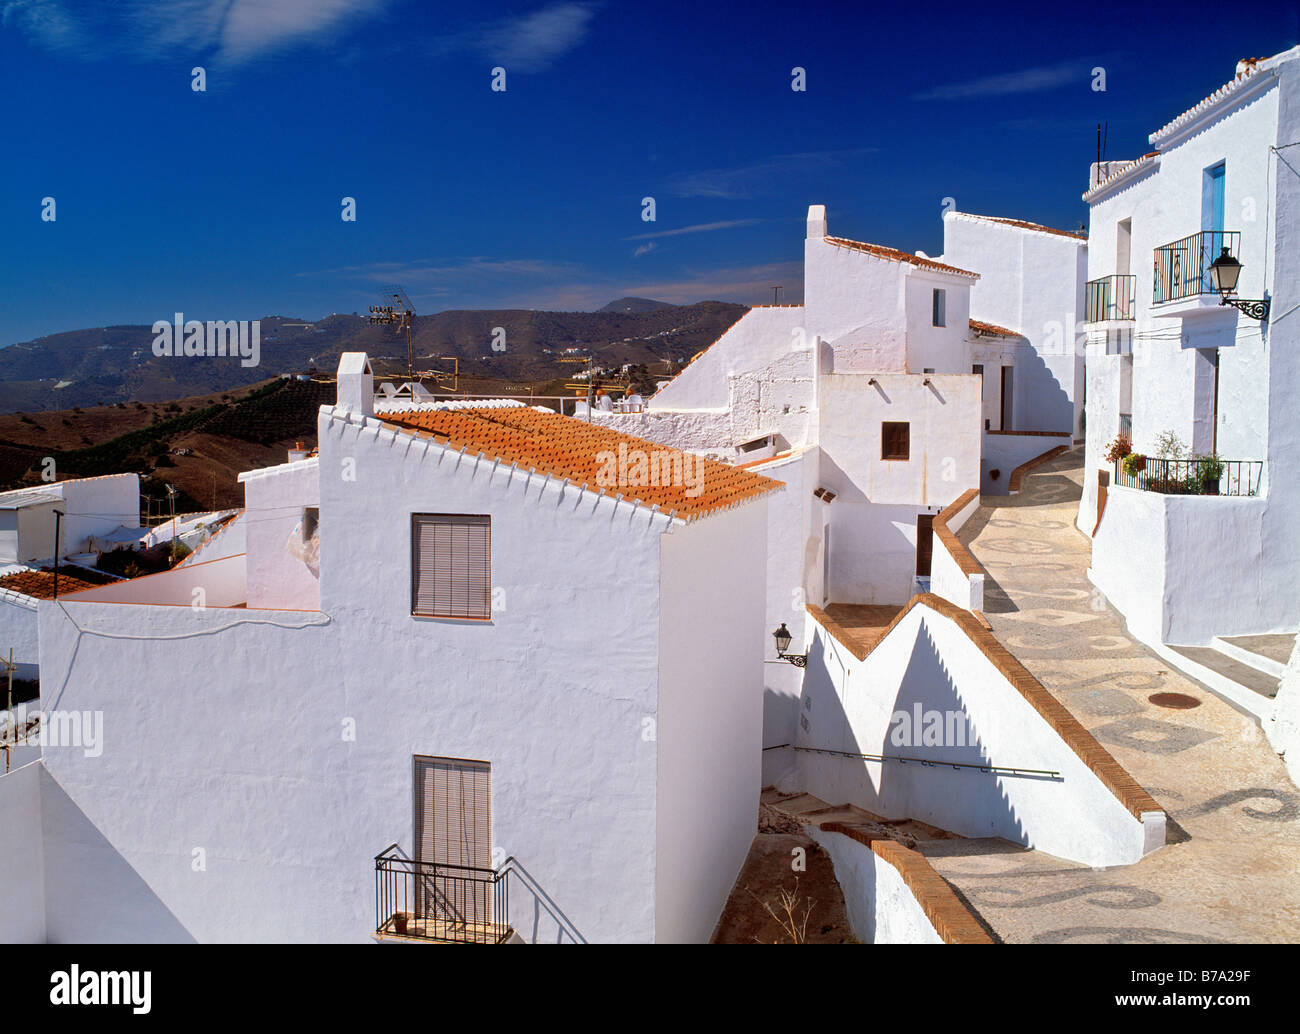 Spagna Andalusia Malaga provincia pueblos blancos villaggio di Frigiliana Foto Stock